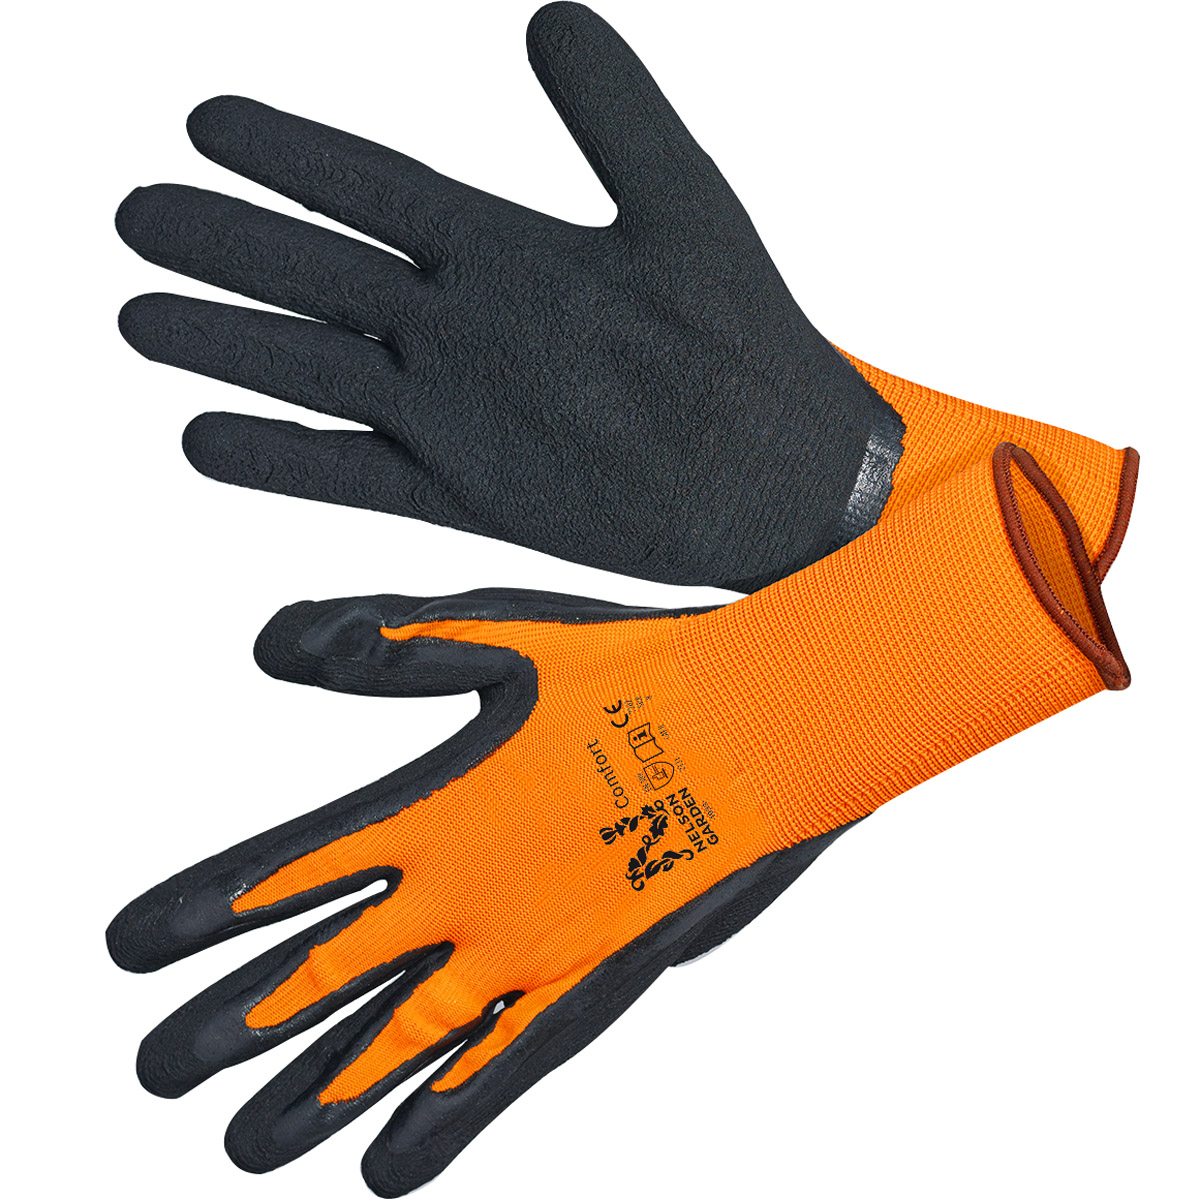 Handske Comfort, storlek 10 orange/svart